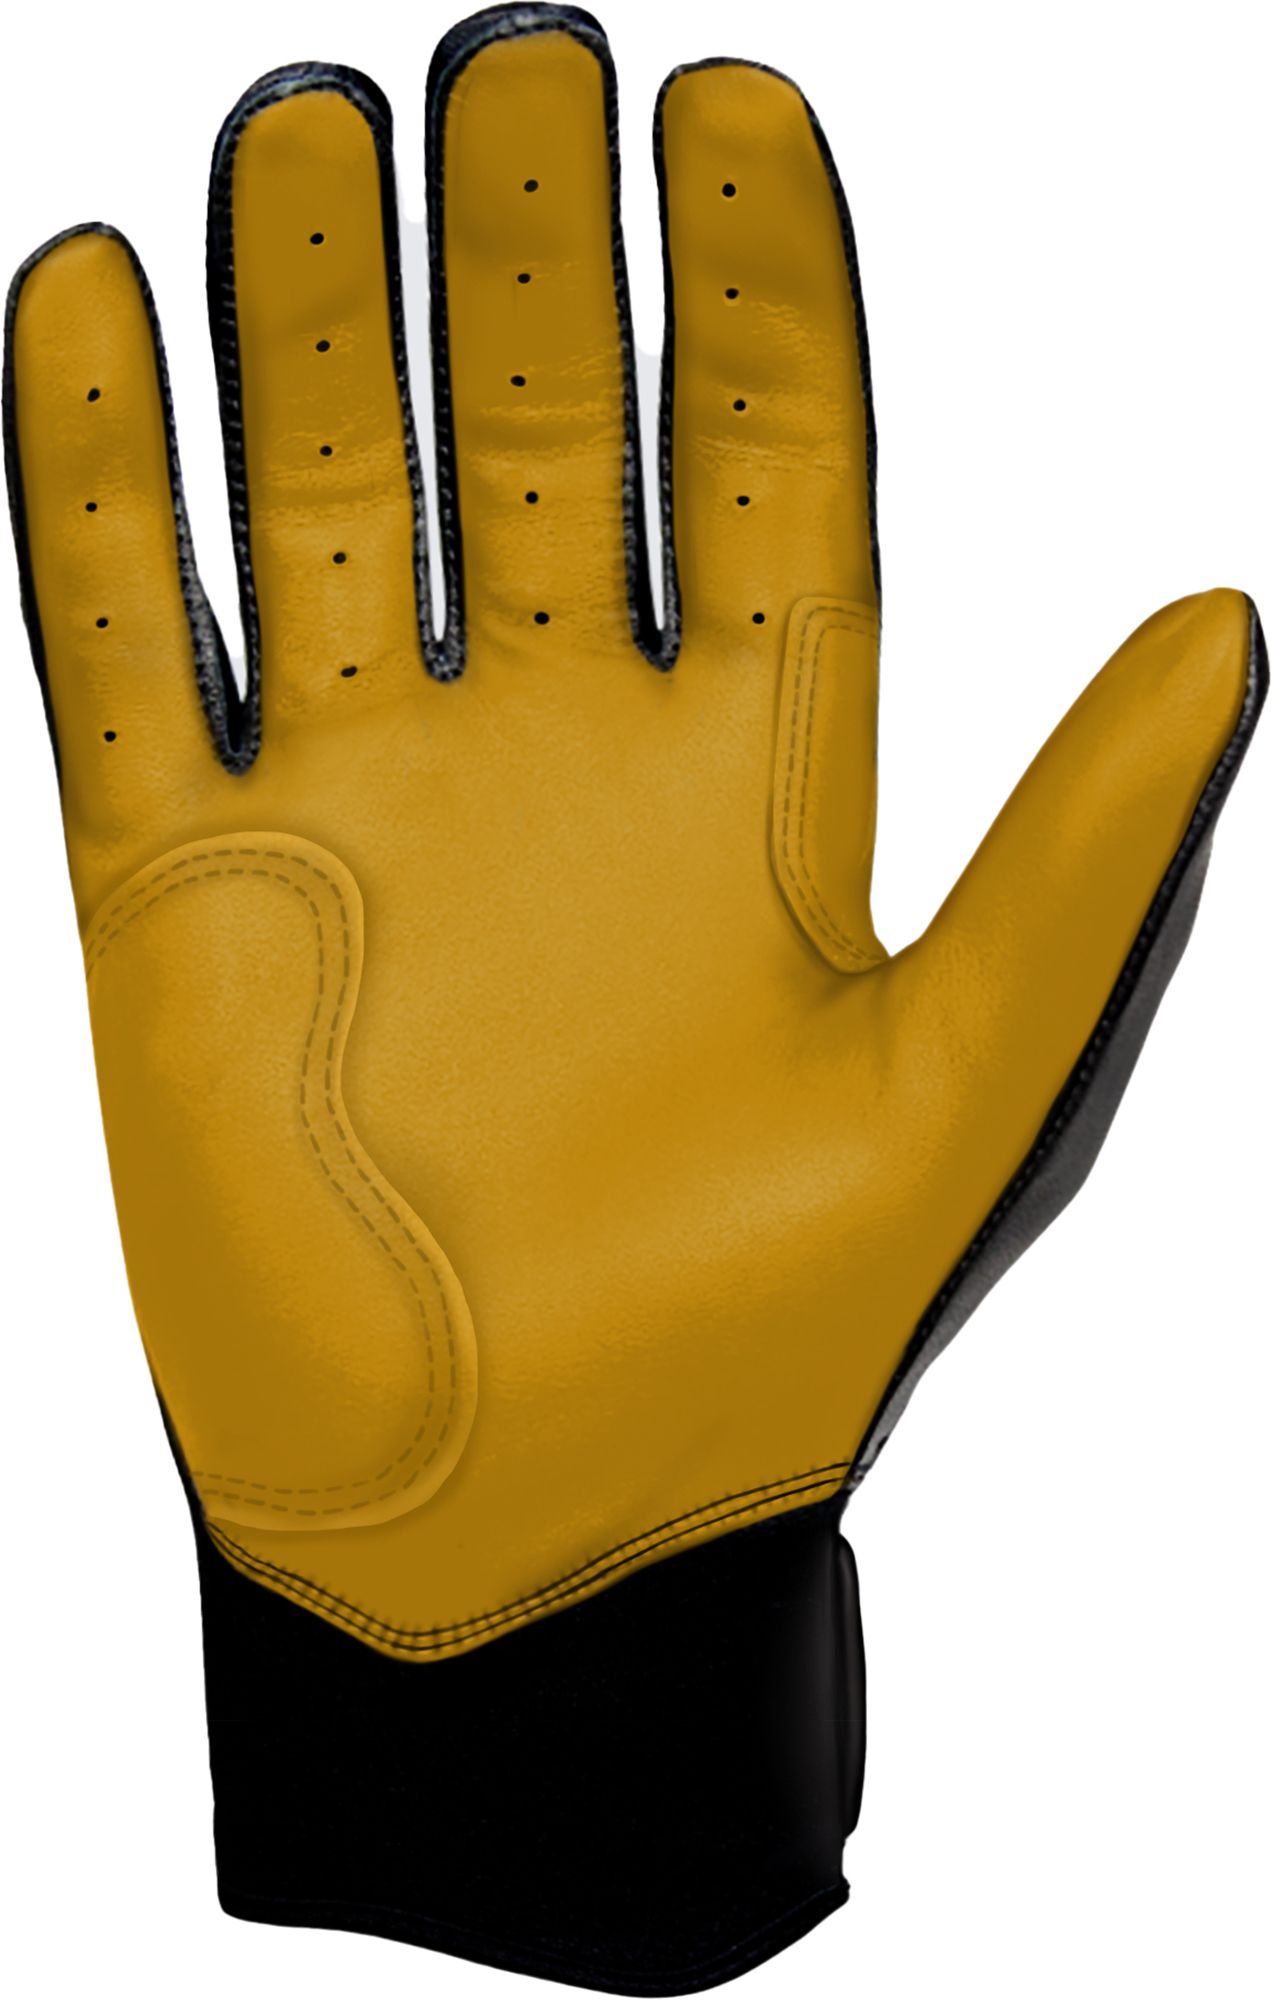 Bruce Bolt Adult Short Cuff Gold Palm Batting Gloves